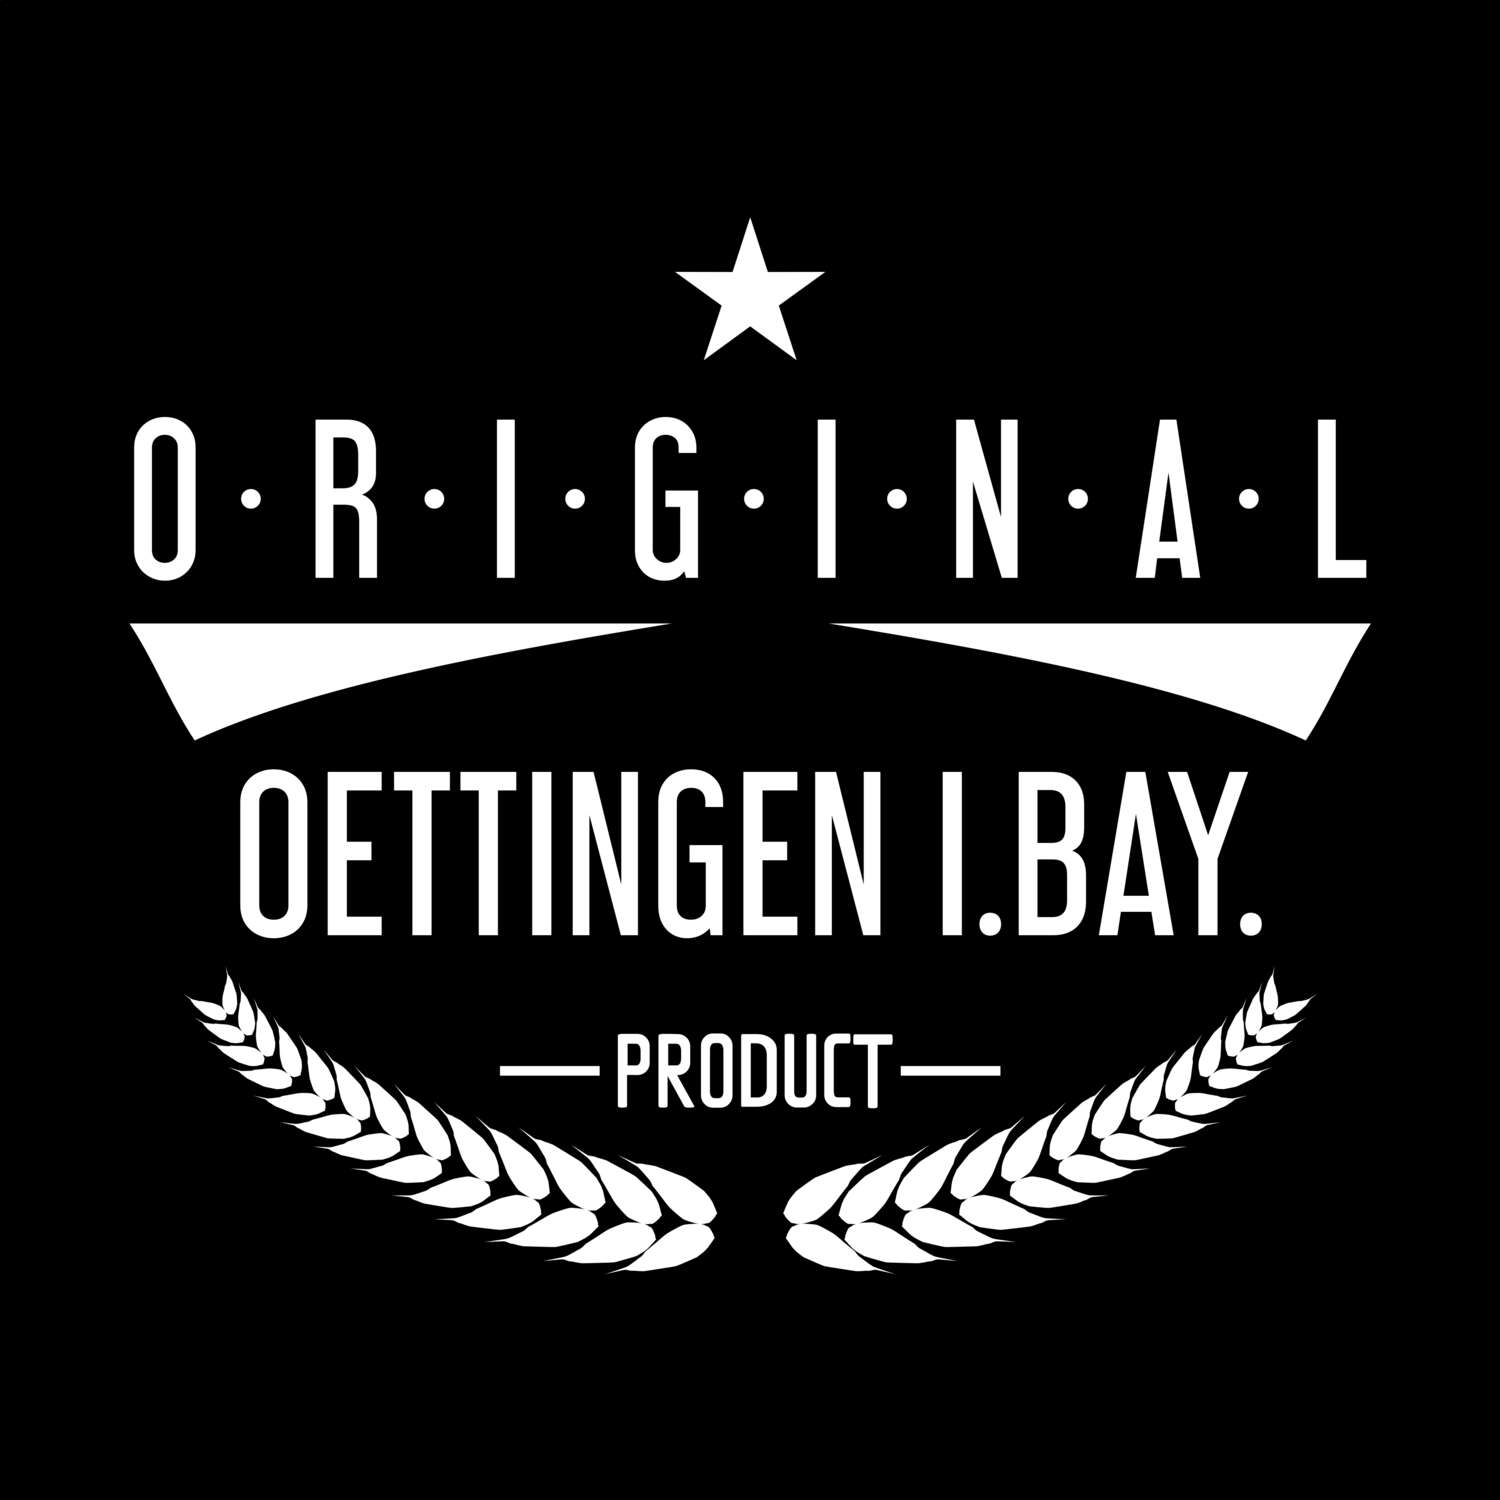 Oettingen i.Bay. T-Shirt »Original Product«